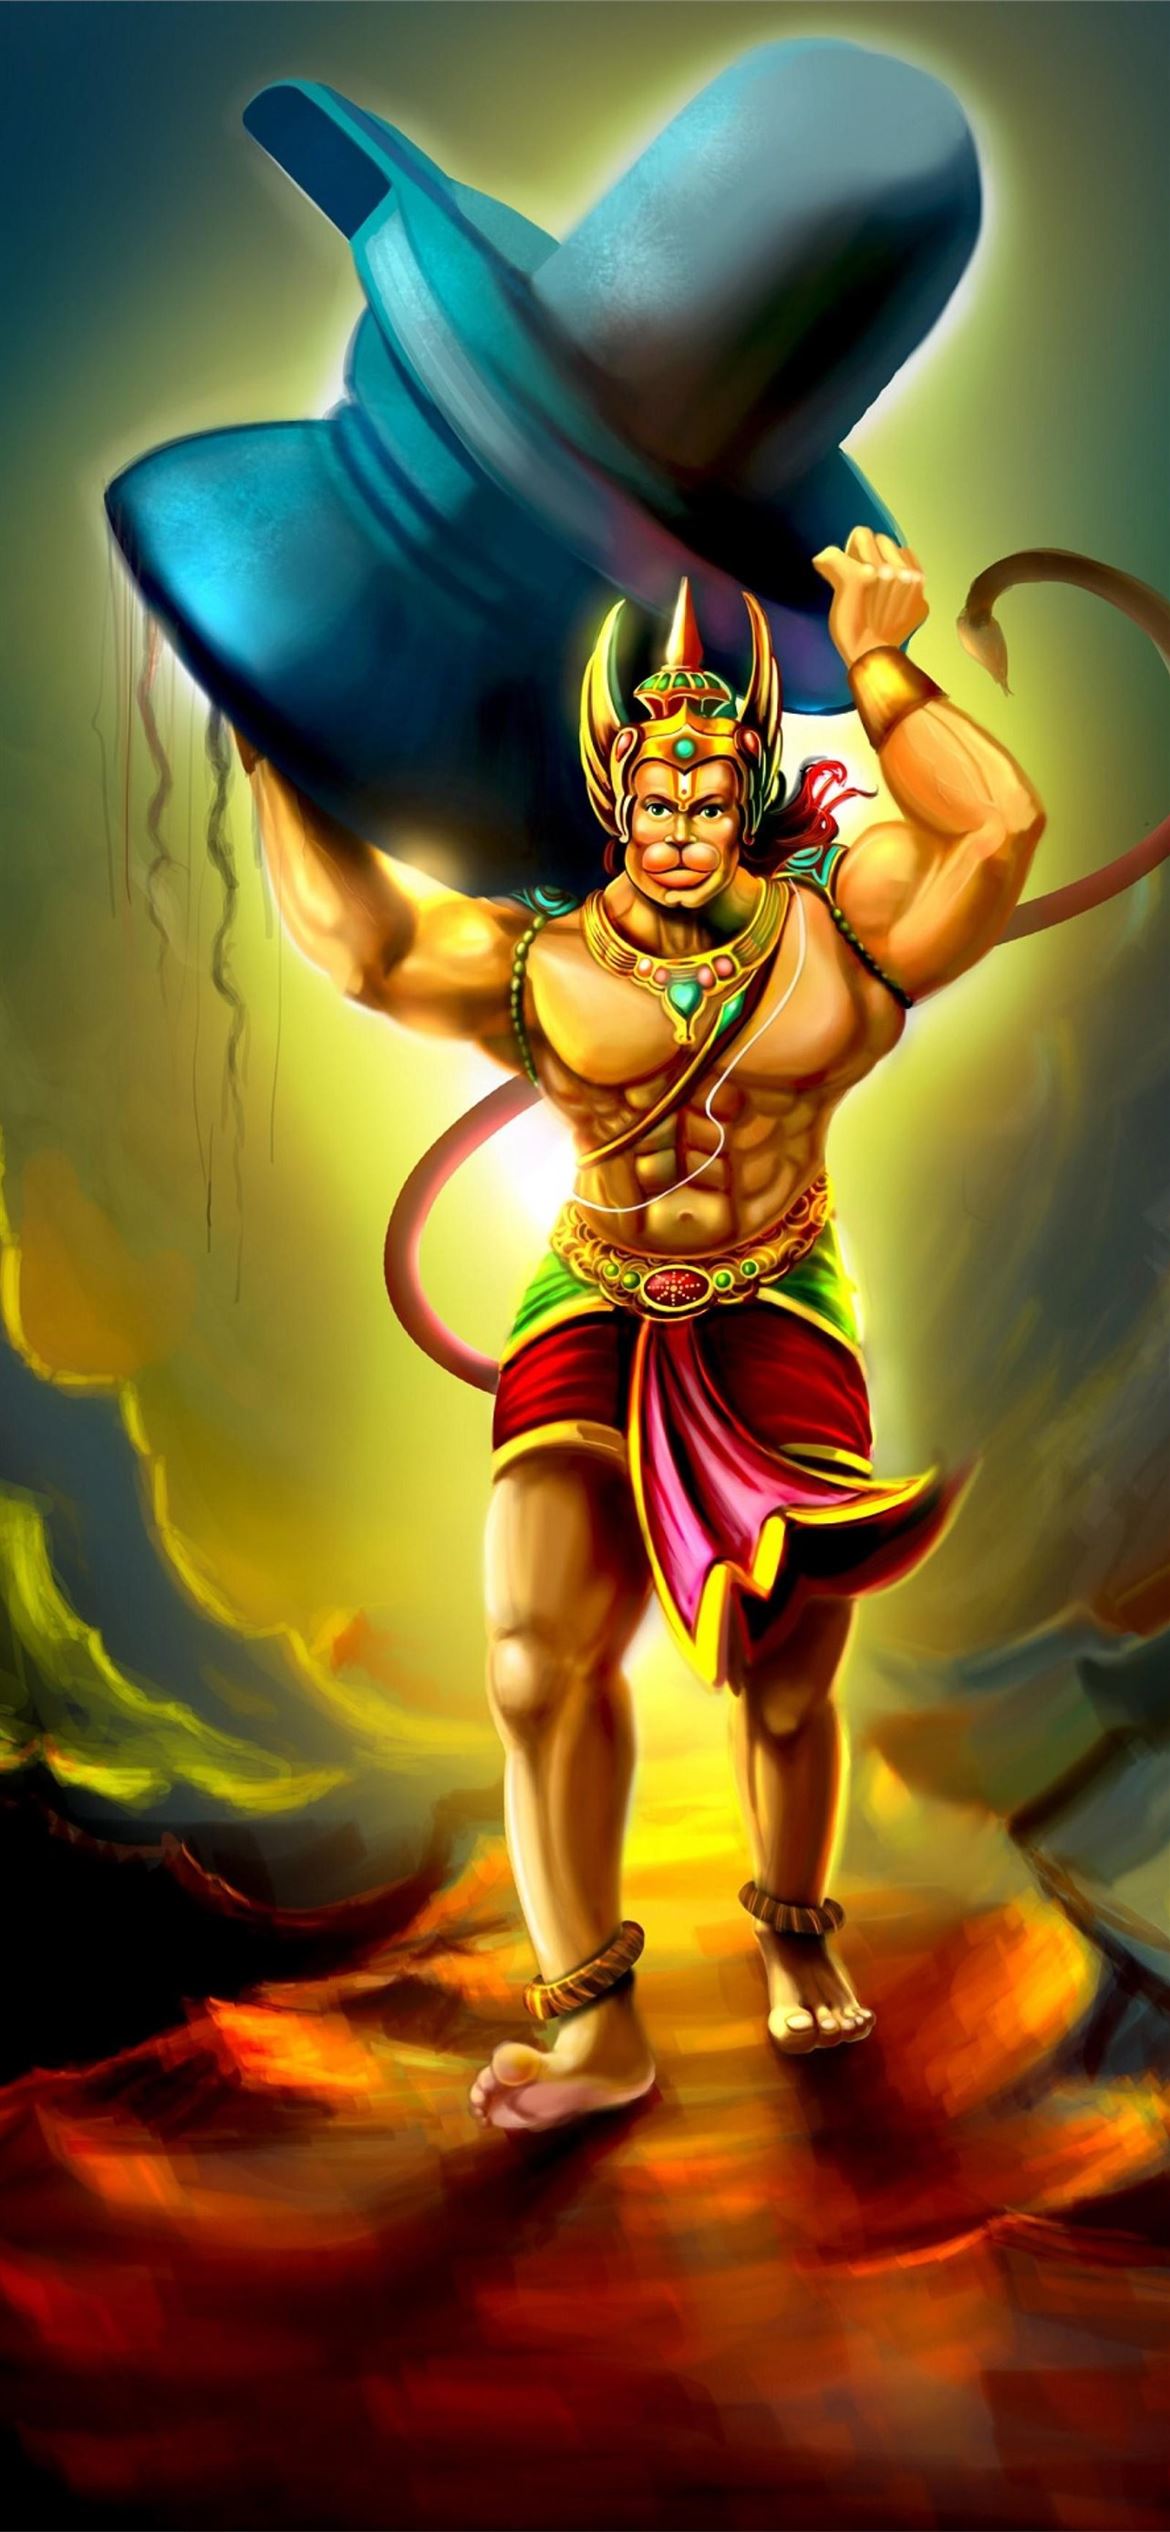 Hanuman Jayanti Wallpapers Stock Photos  Images For Free Download